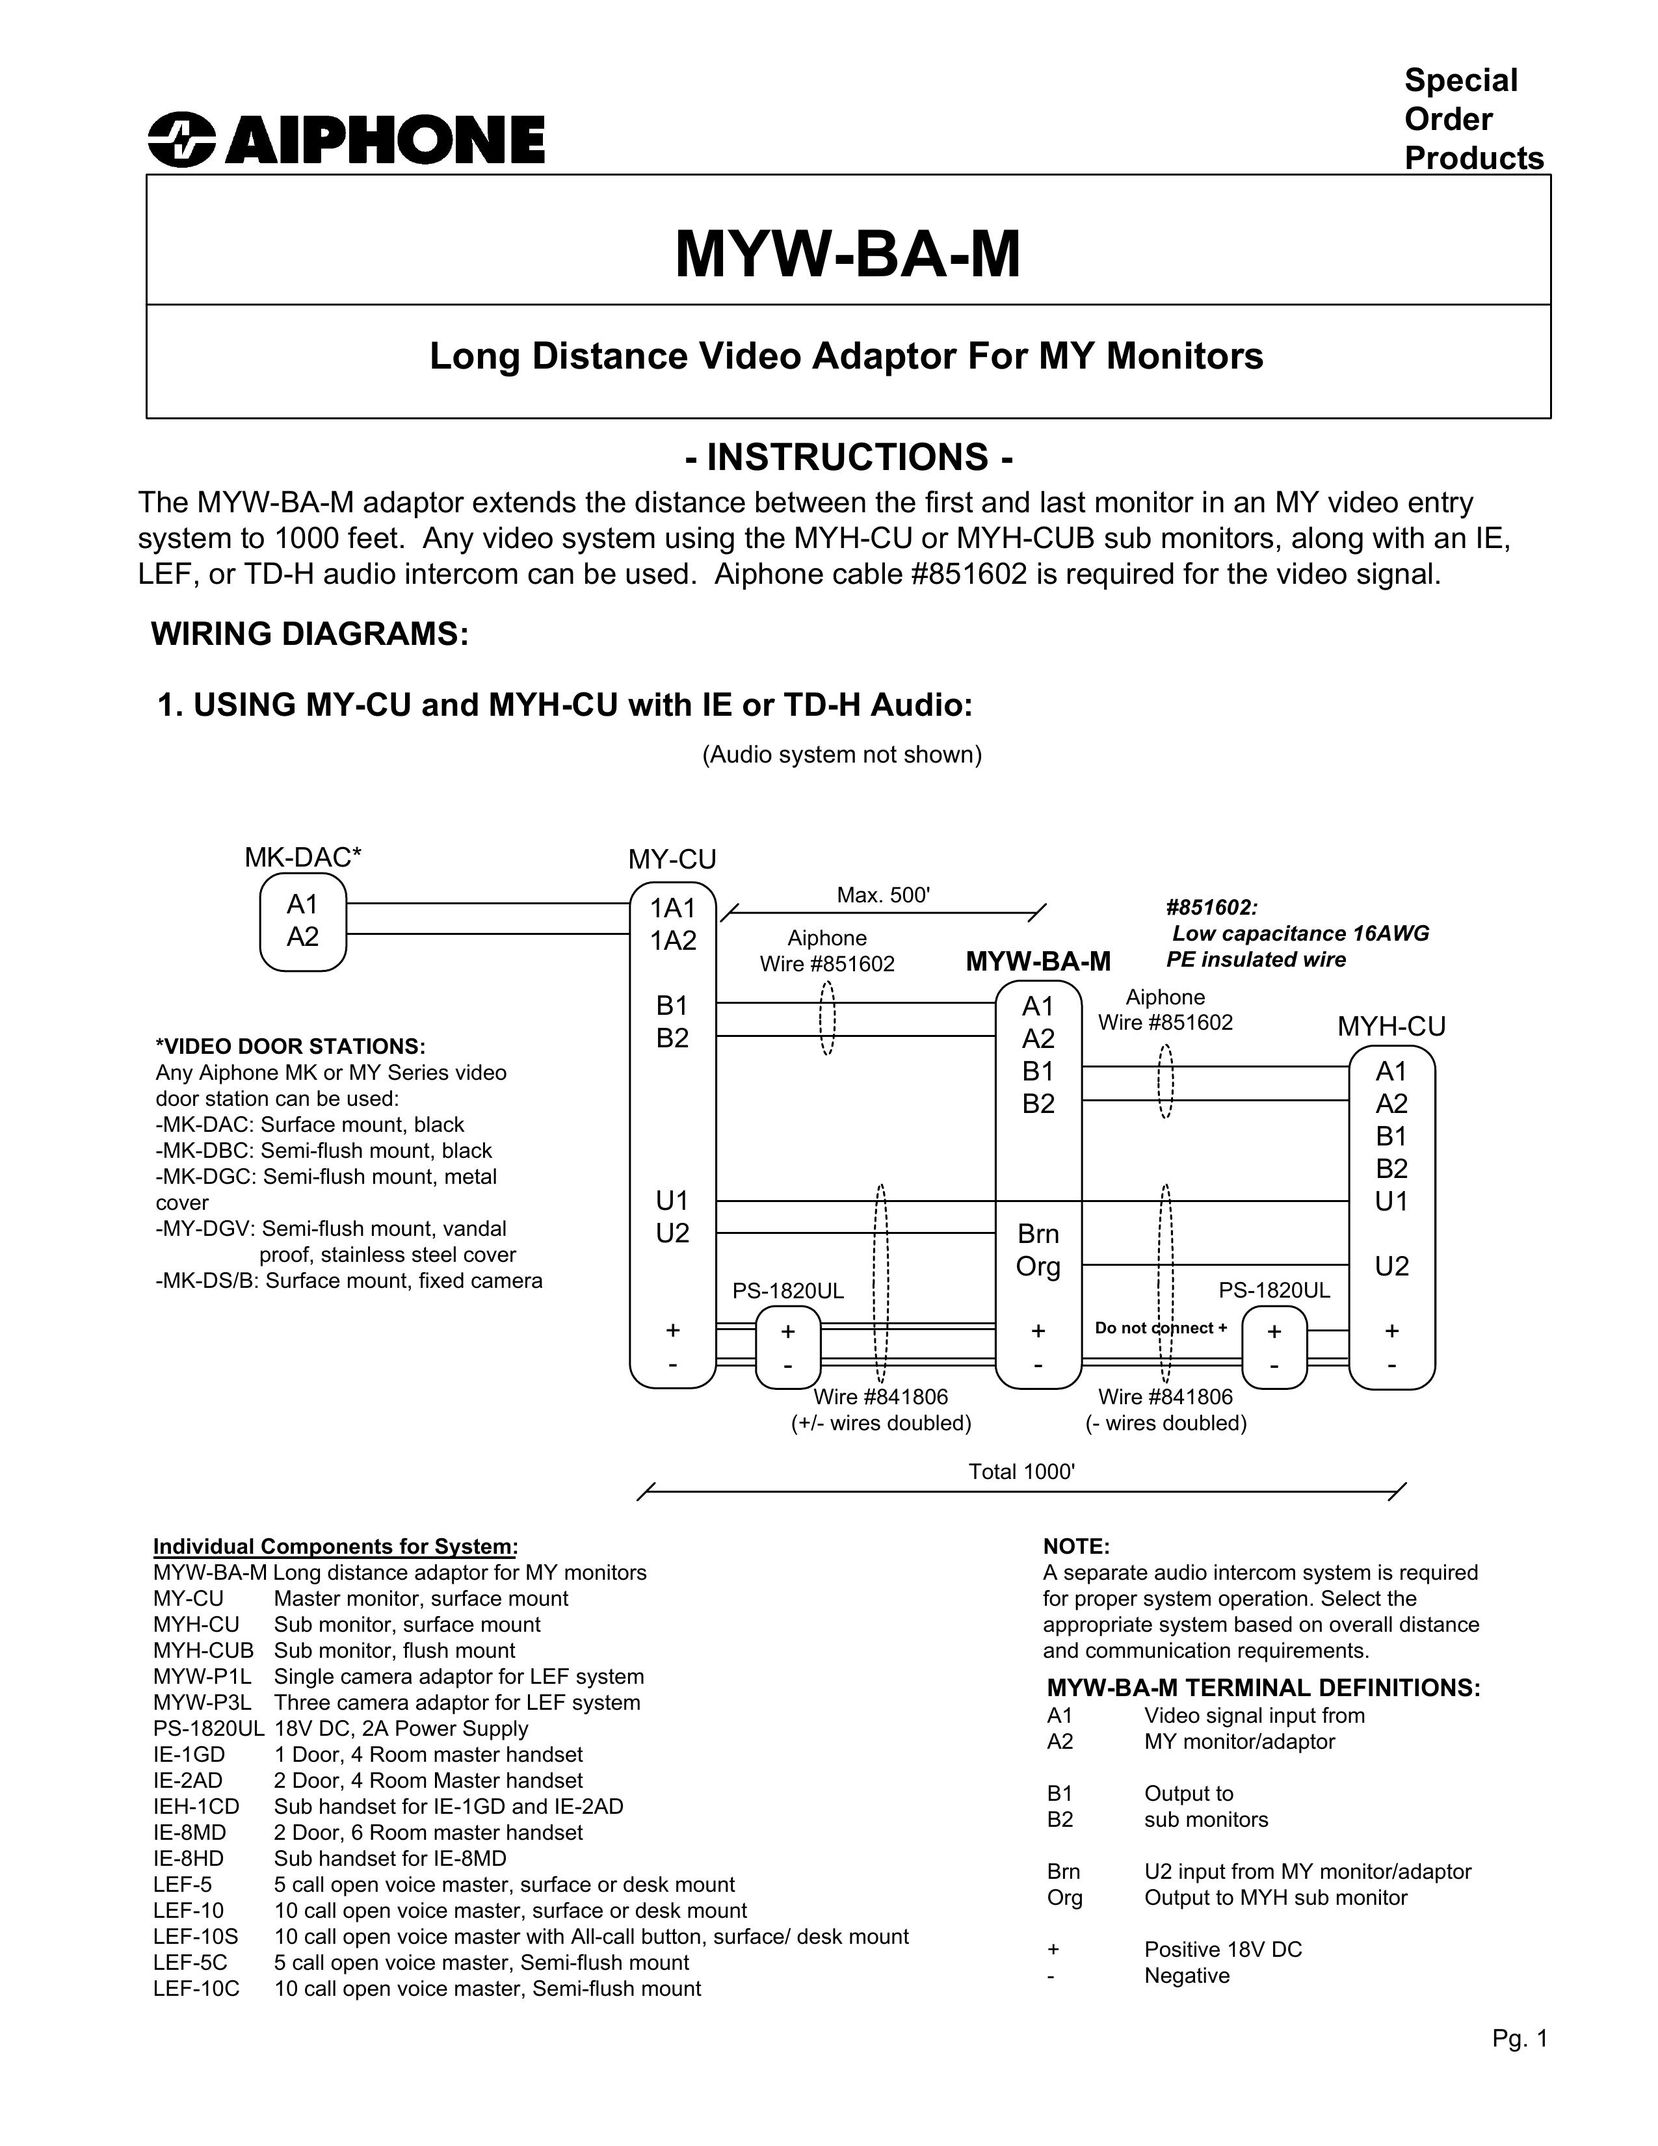 Aiphone MYW-BA-M Network Card User Manual